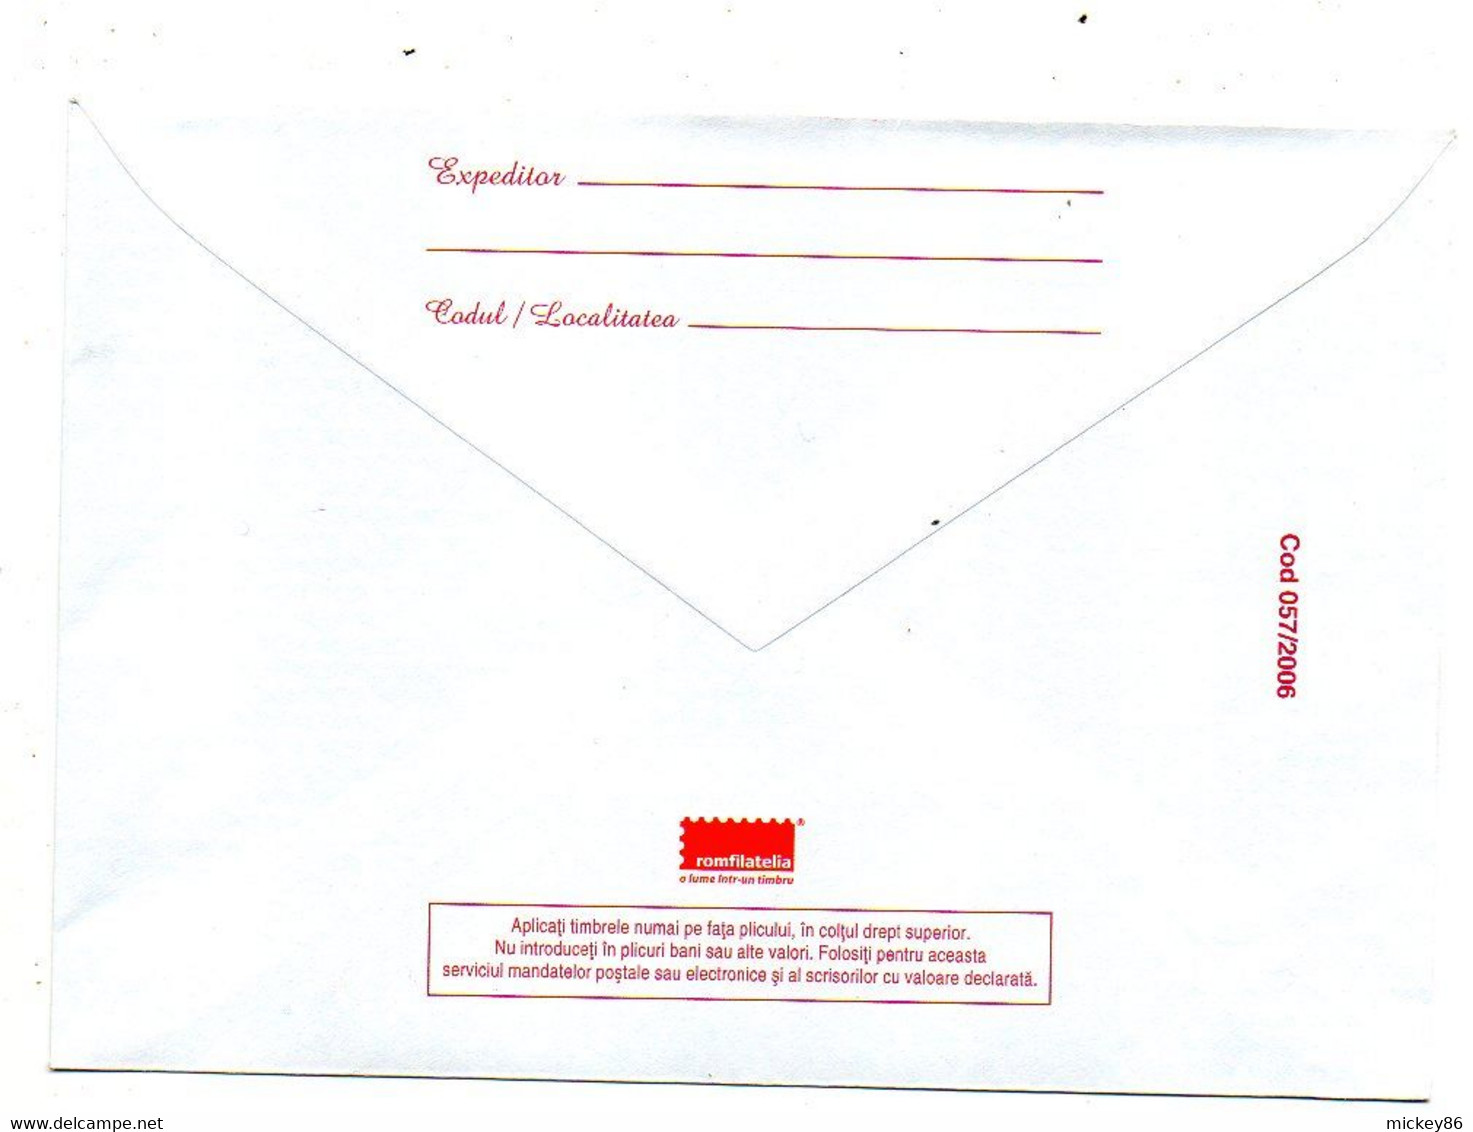 ROUMANIE----Entier Postal  Enveloppe NEUF ...--Ulcior De Nunta ..........à Saisir - Postwaardestukken